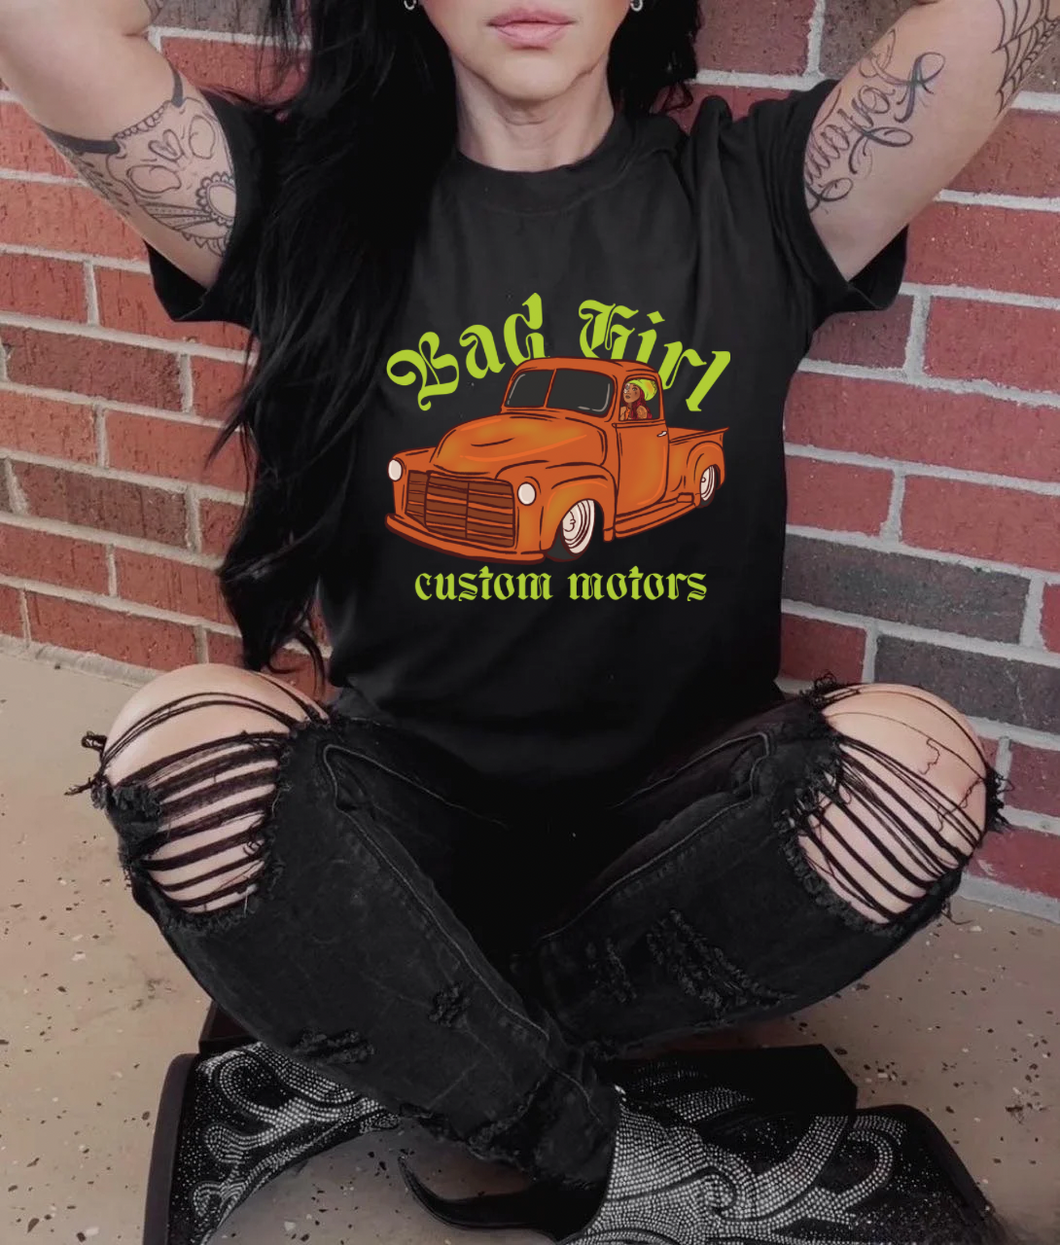 Bad girls custom motors Tee